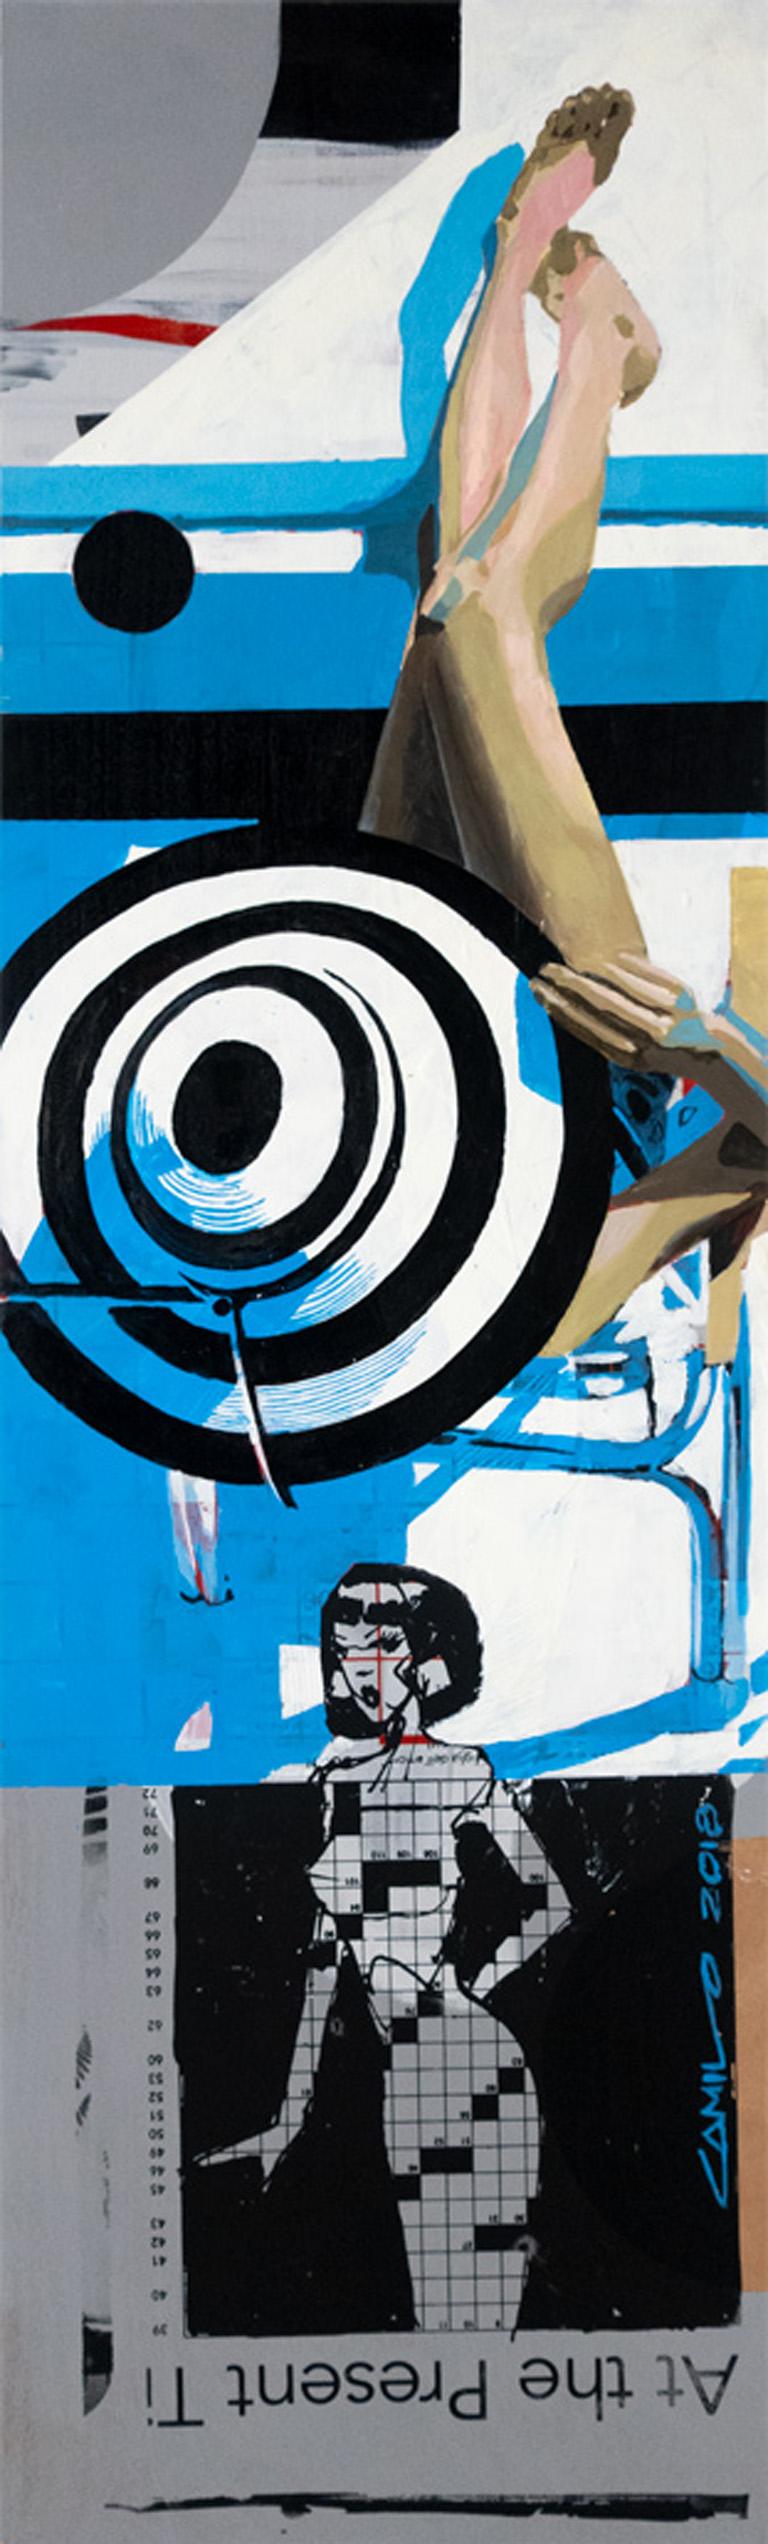 Camilo Pardo Abstract Painting - Too Miami